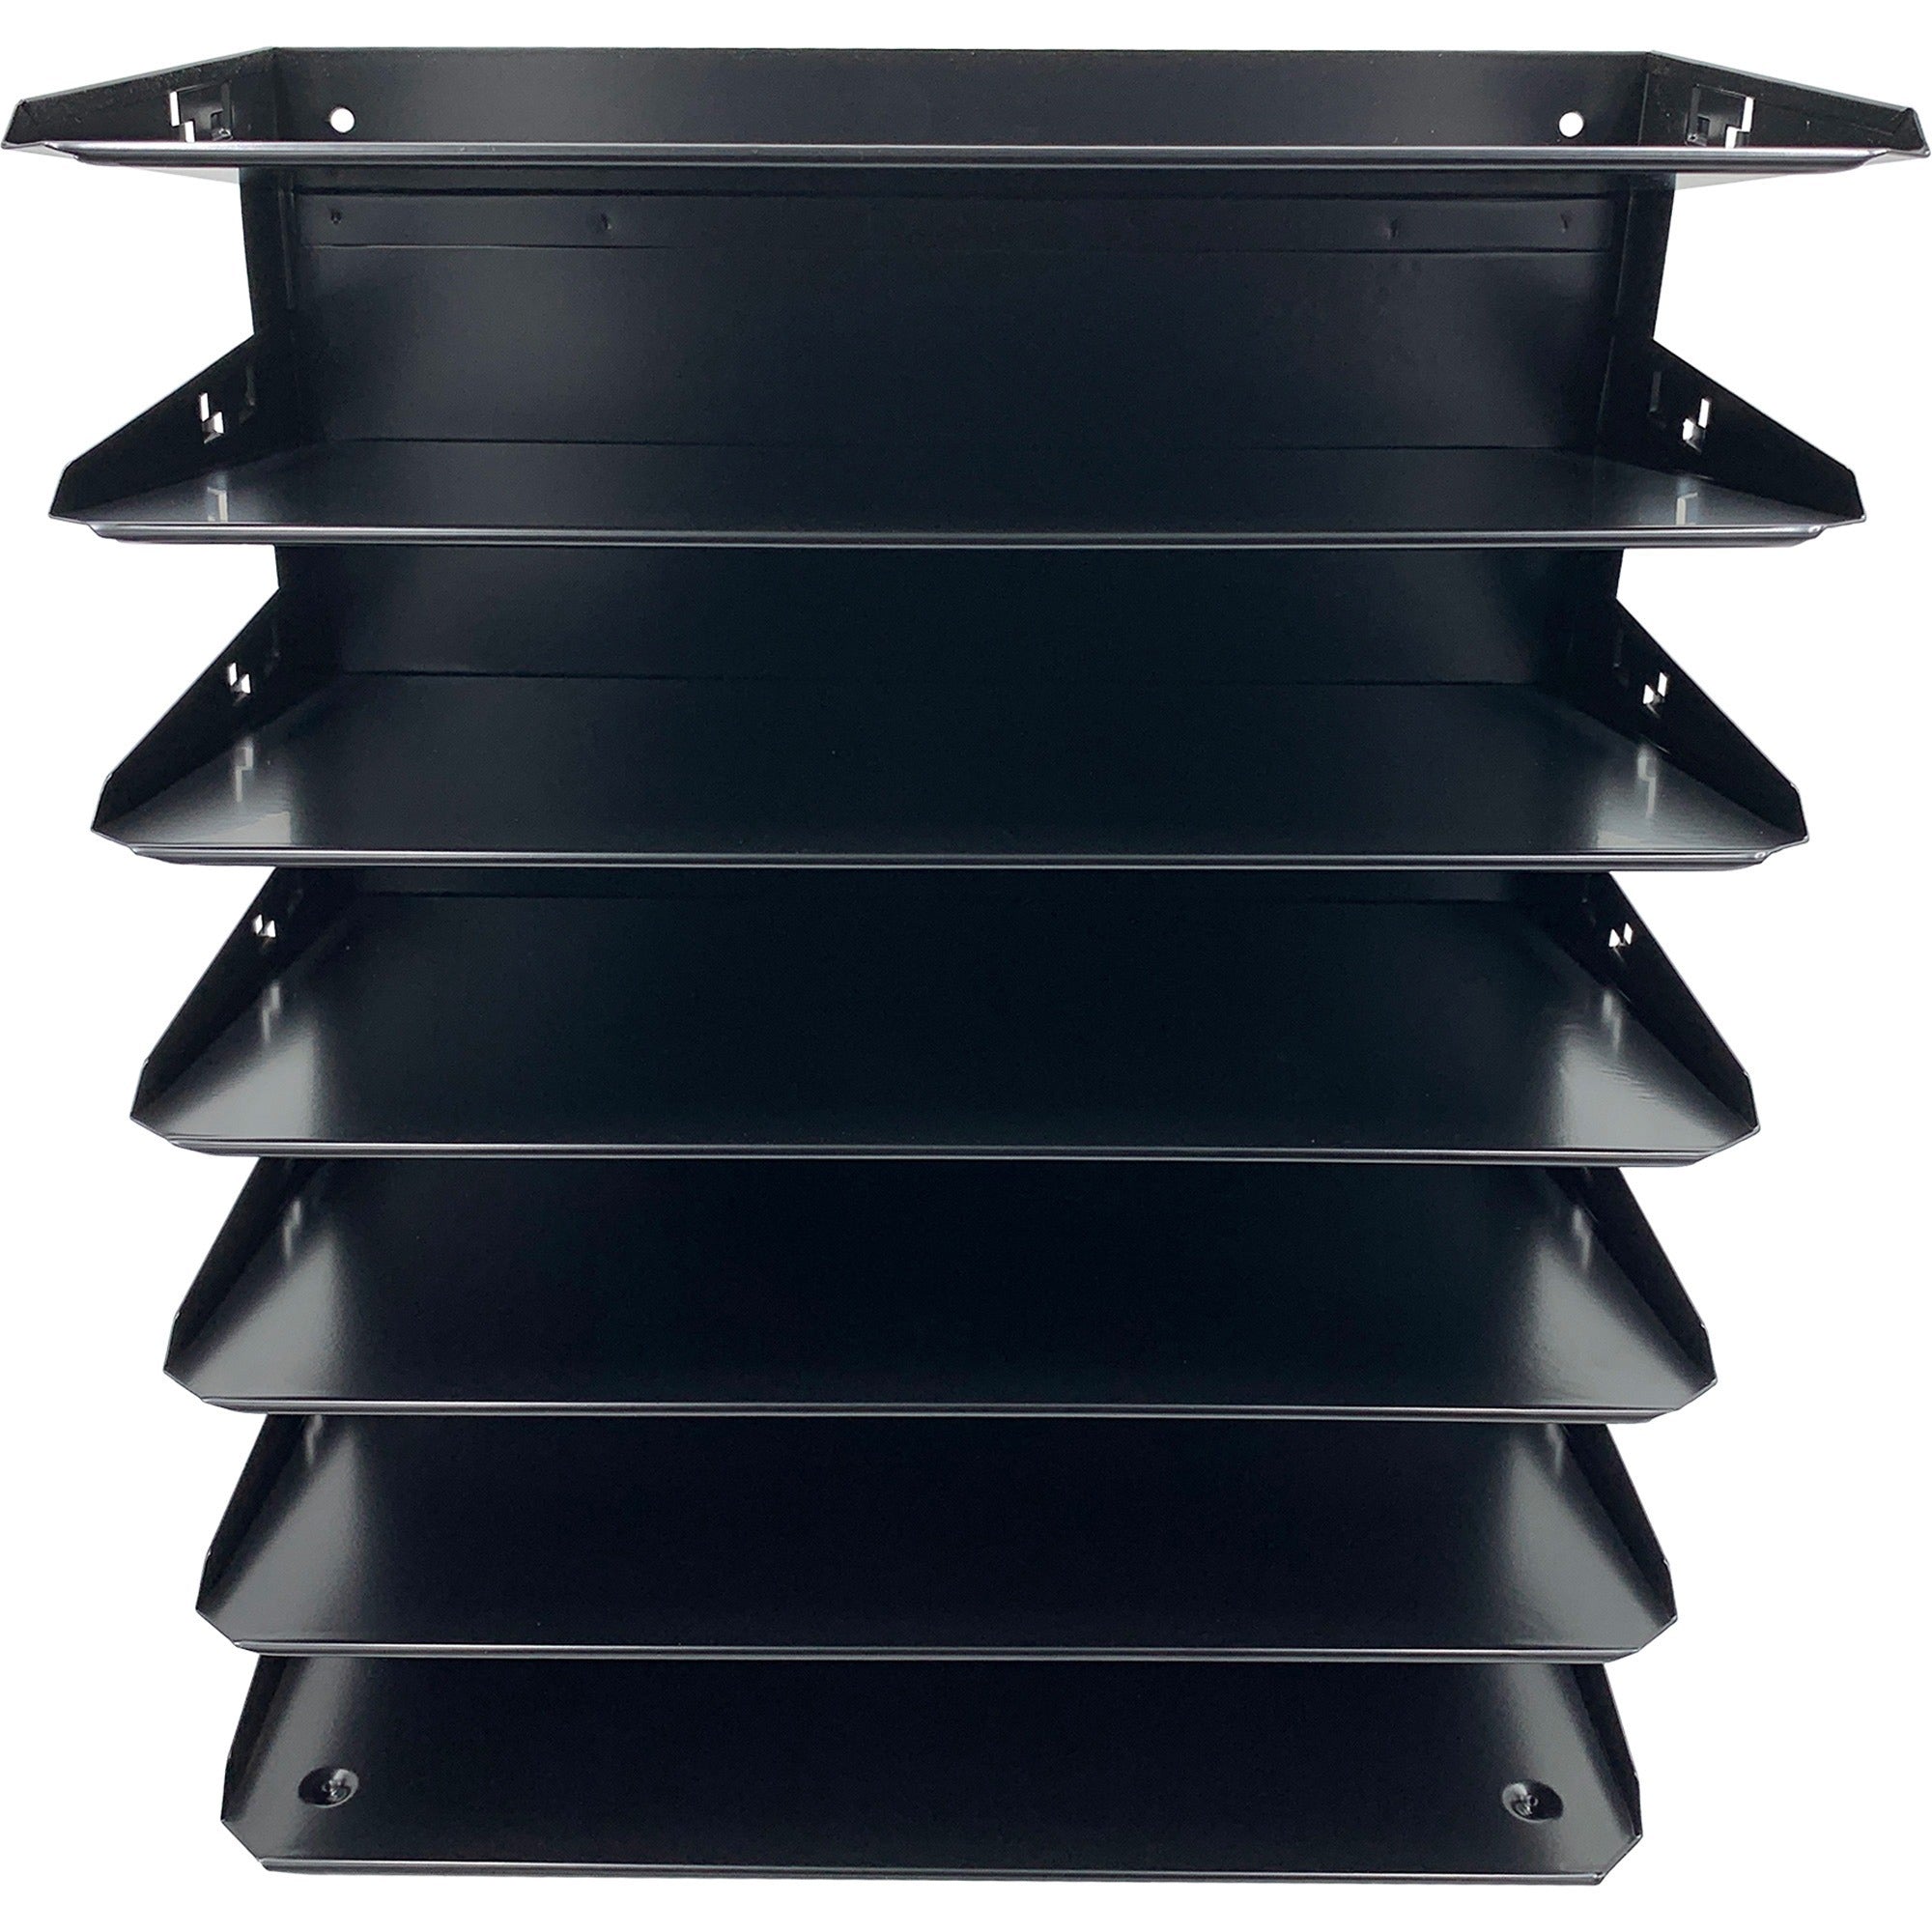 huron-horizontal-slots-desk-organizer-7-compartments-horizontal-15-height-x-15-width-x-88-depth-durable-black-steel-1-each_hurhasz0160 - 2